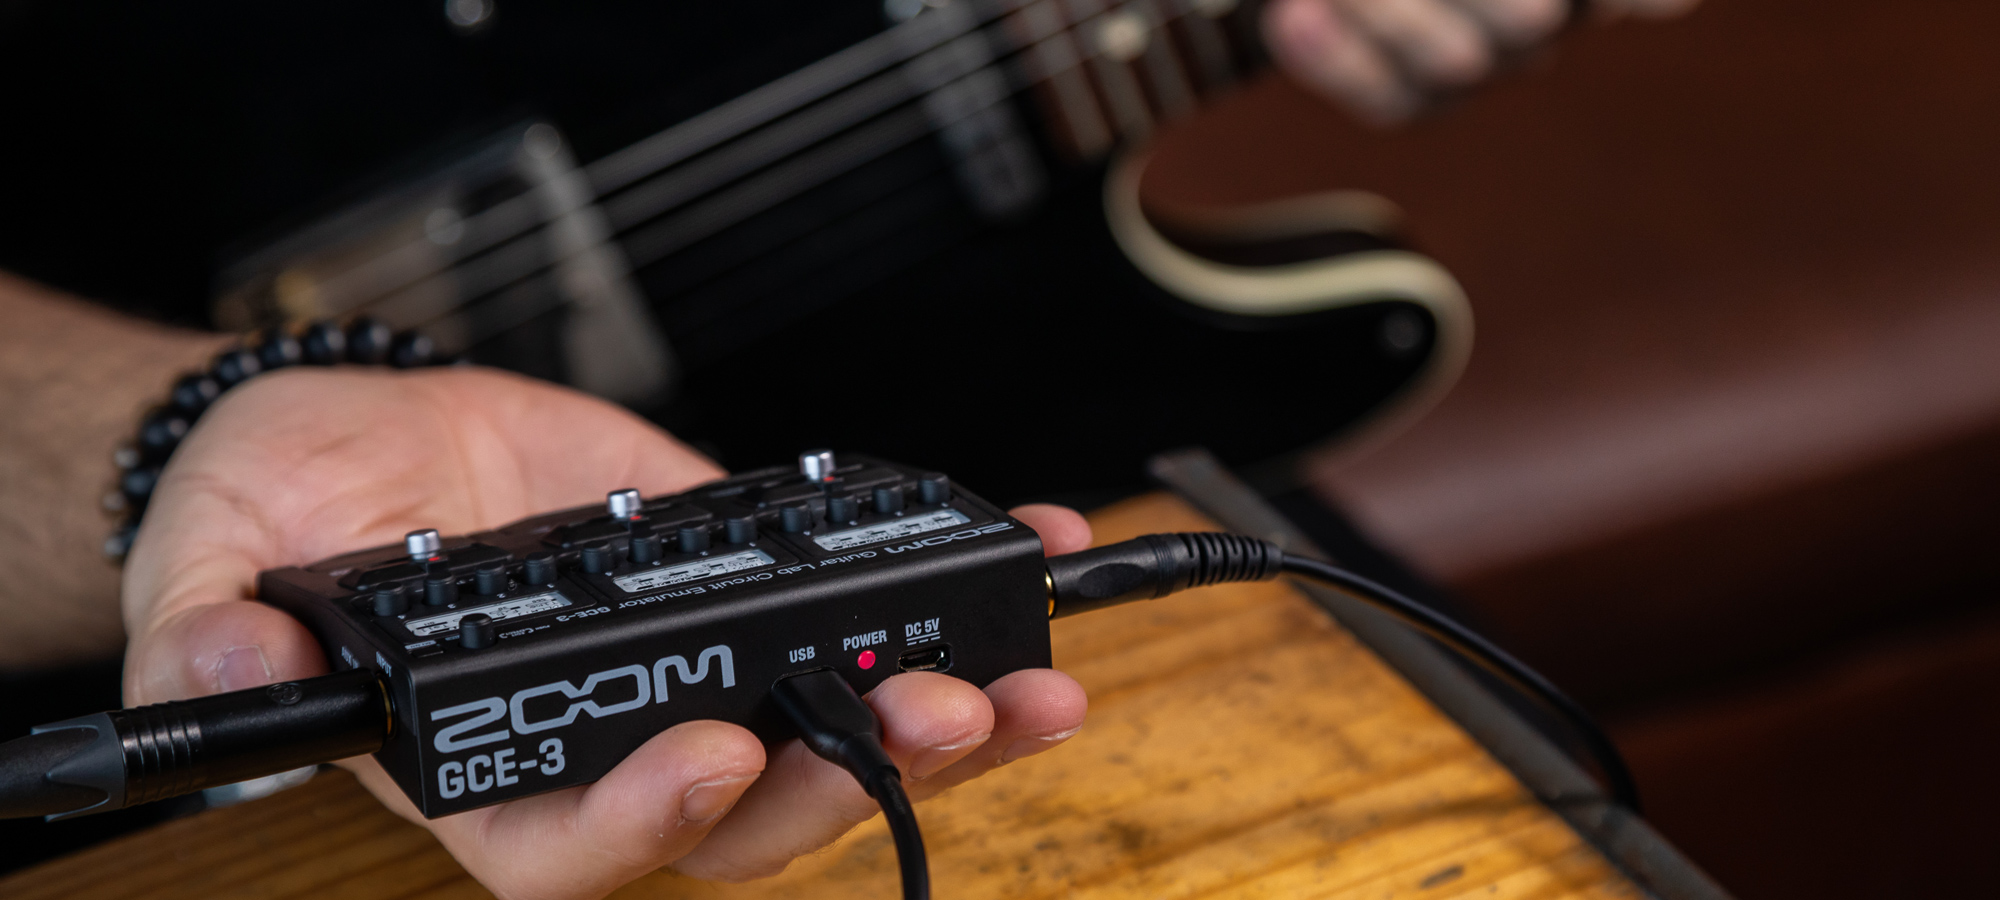 Zoom gce-3 USB chitarra Audio Interface EFFETTO PEDALE emulatore software Cubase 